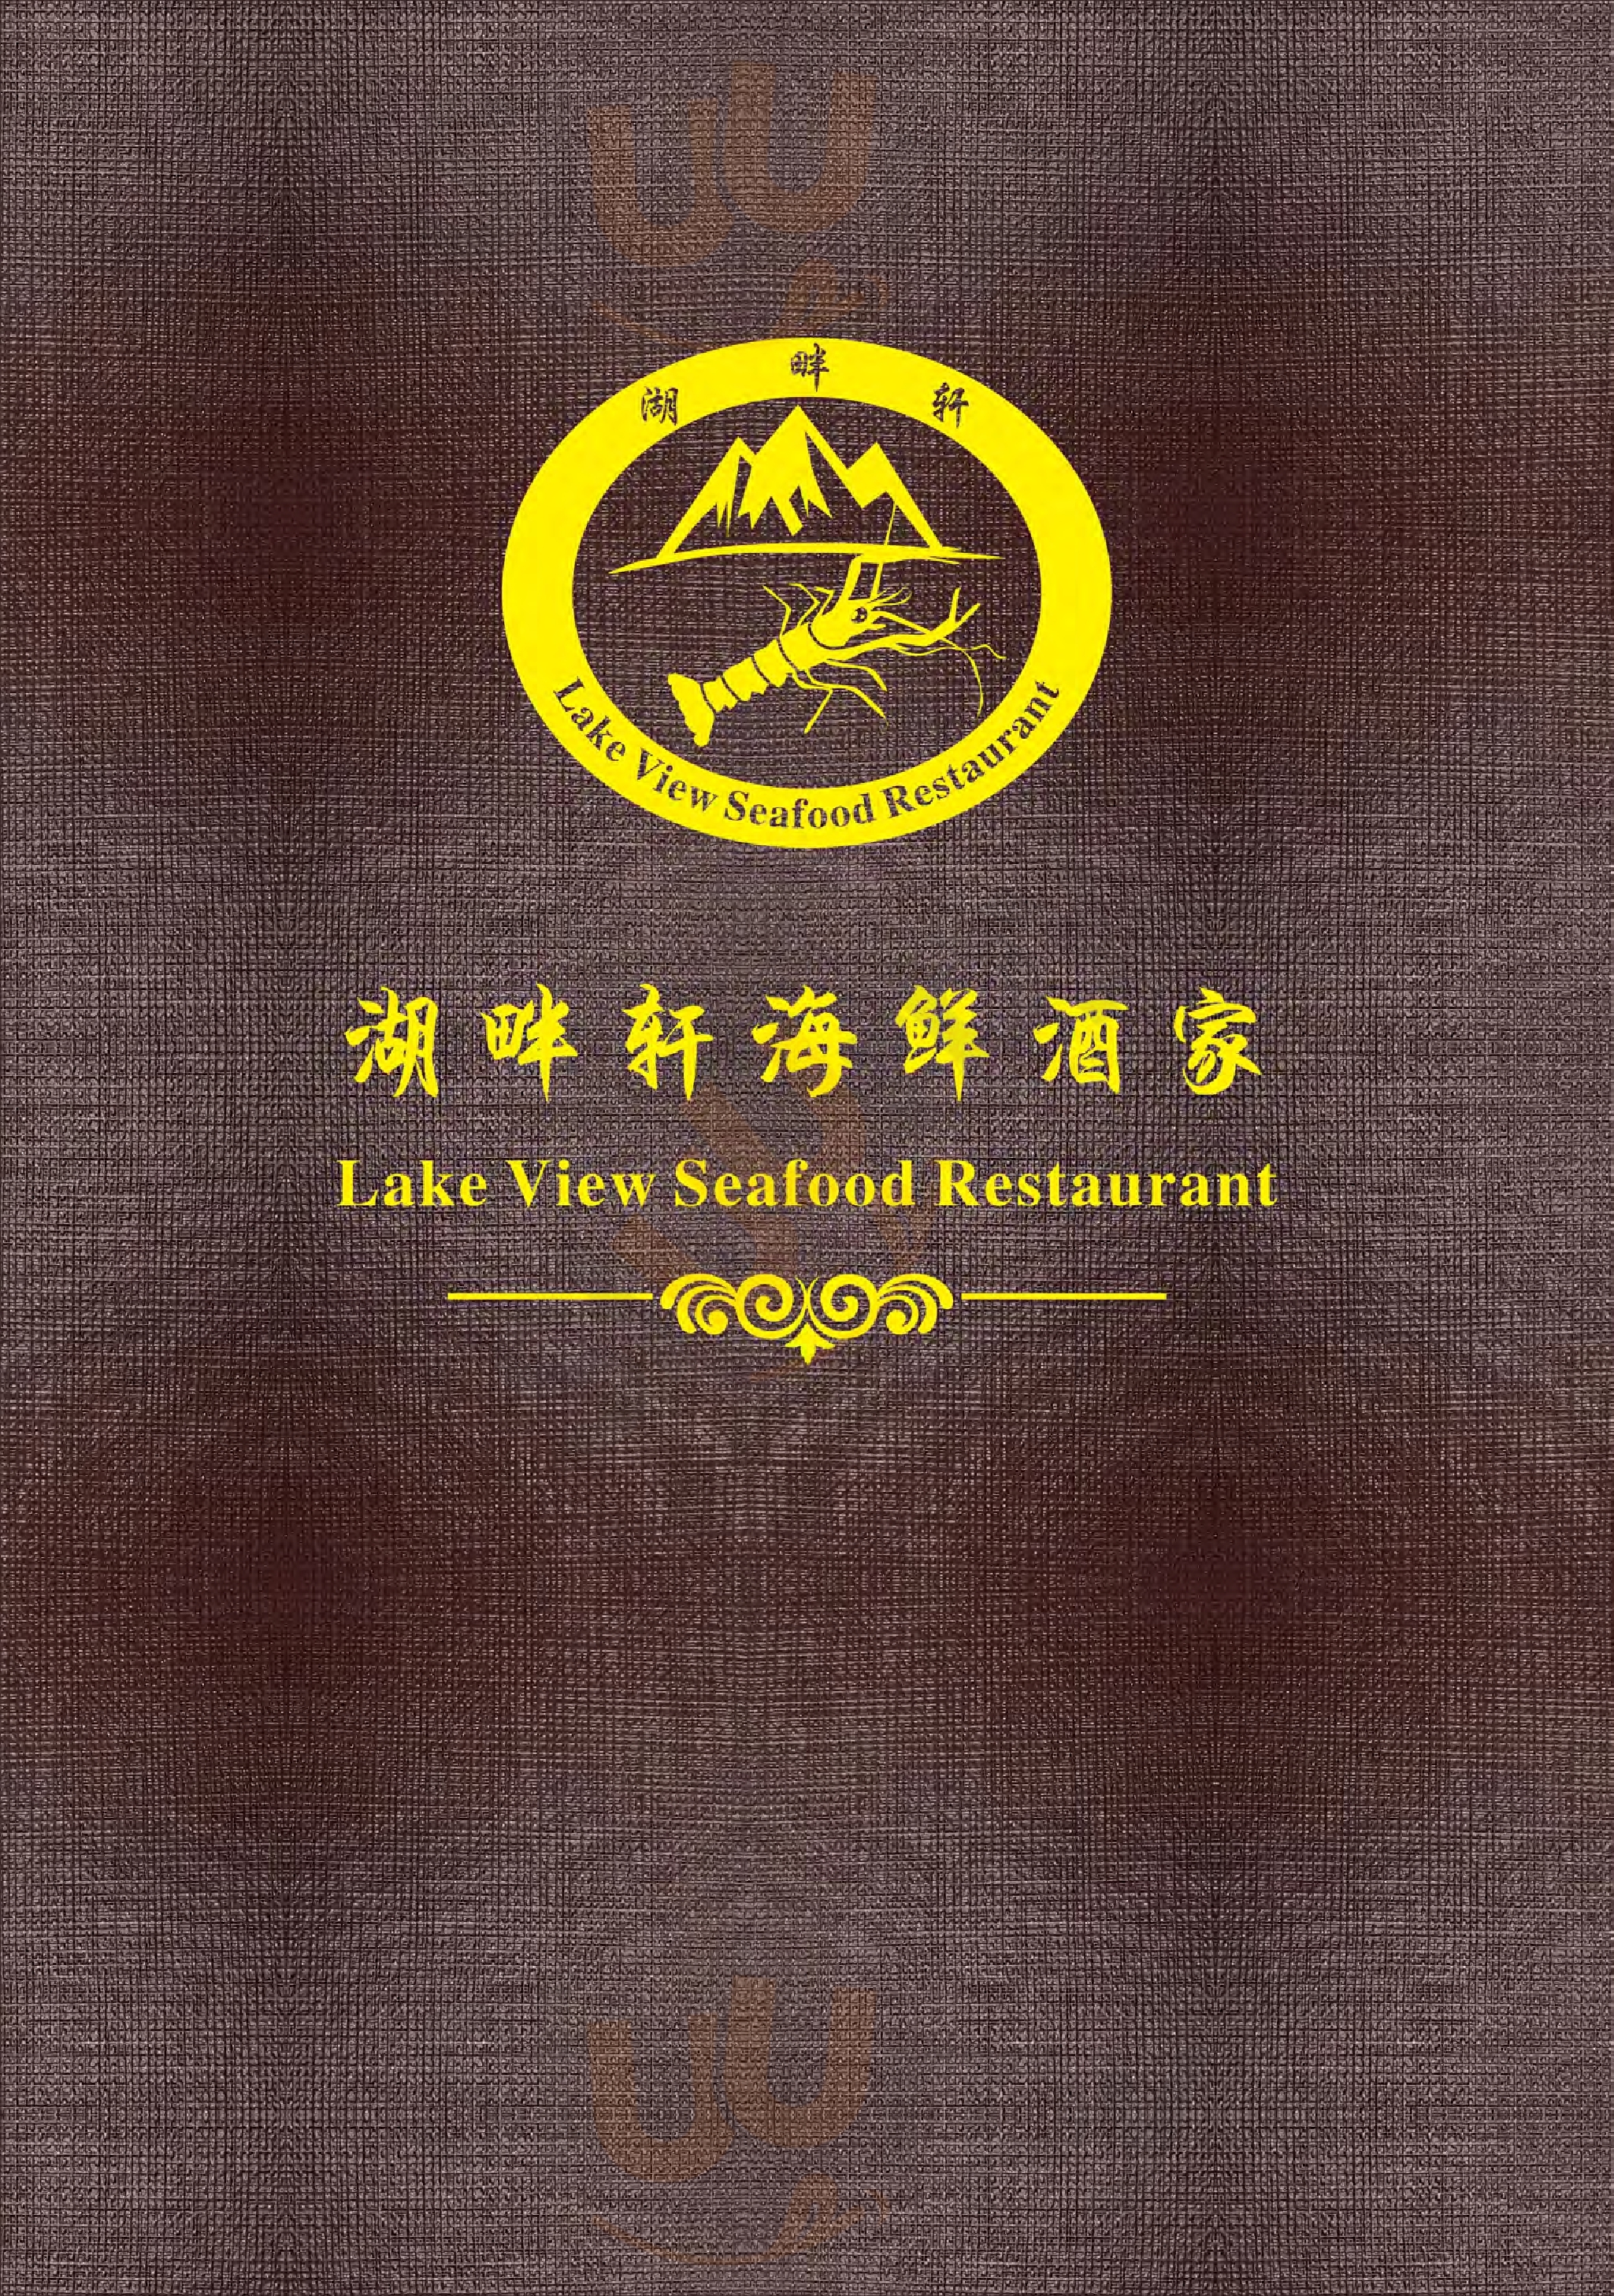 Lakeview Seafood Restaurant Wanaka Menu - 1